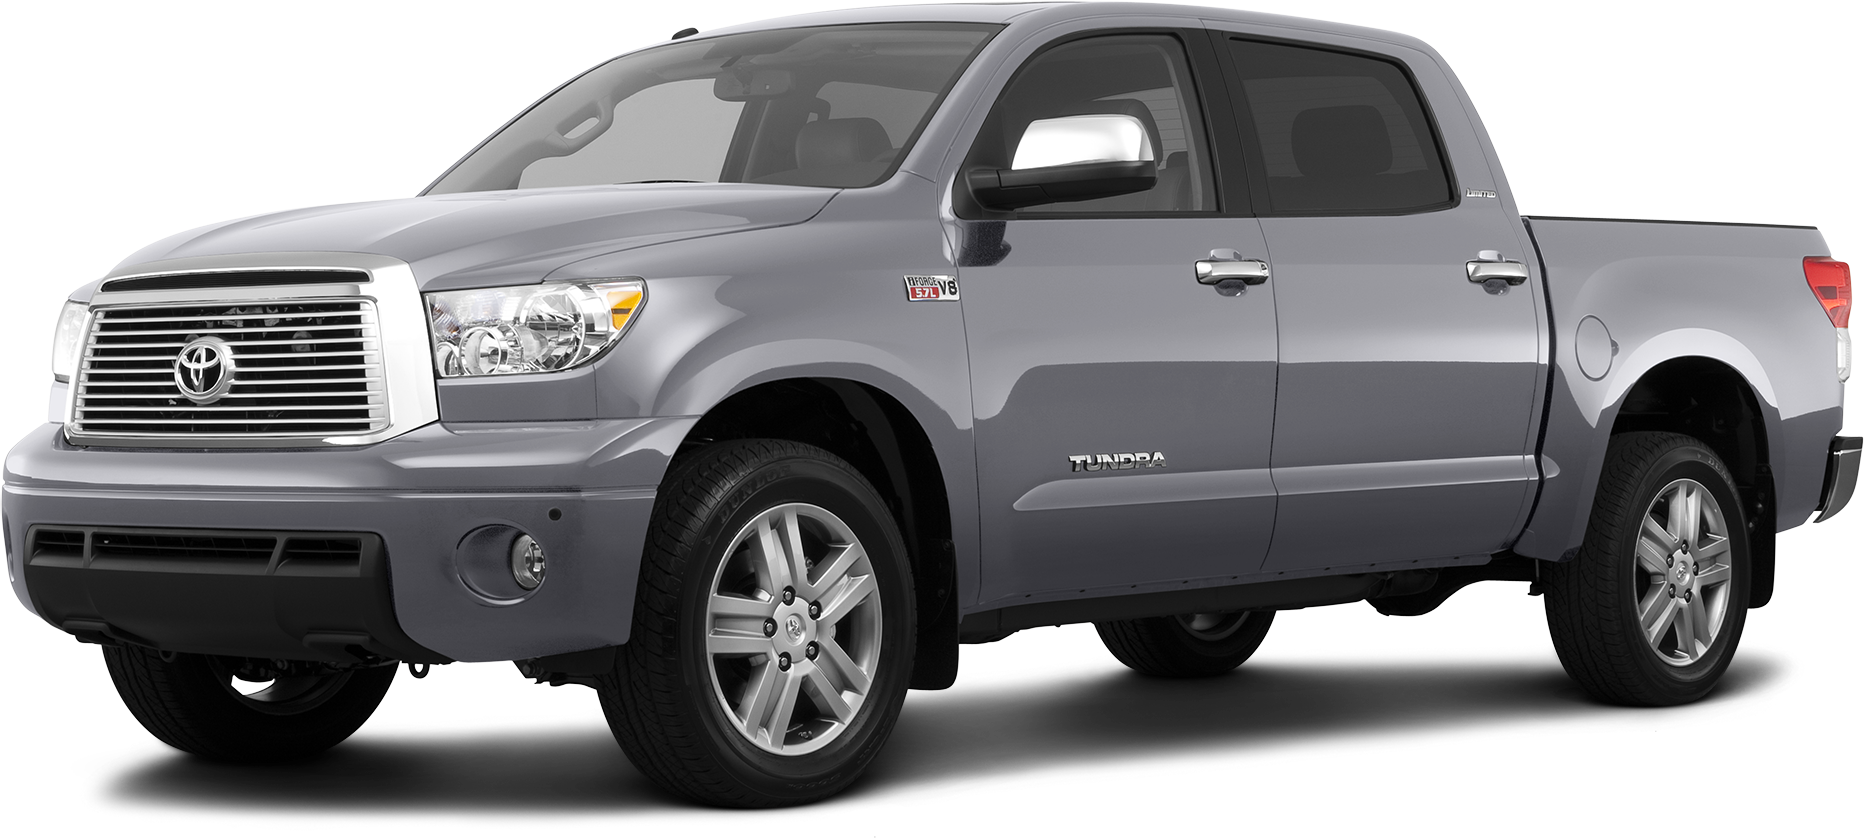 2010 Toyota Tundra Blue Book Value